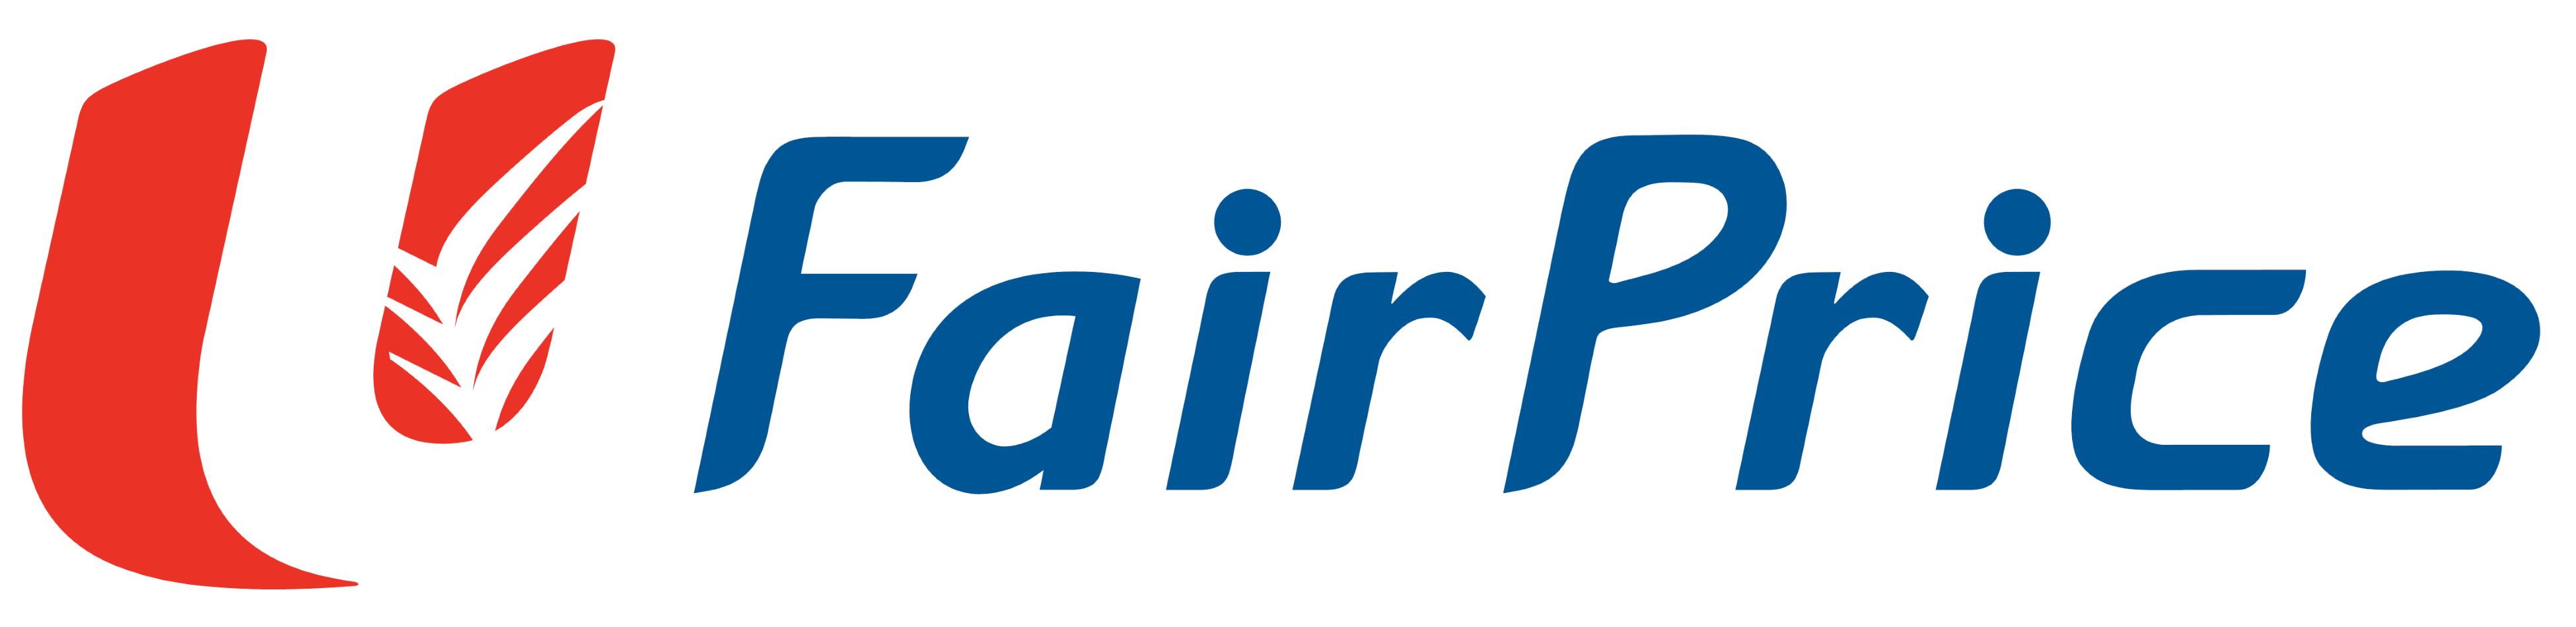 FairPrice logo, logotype